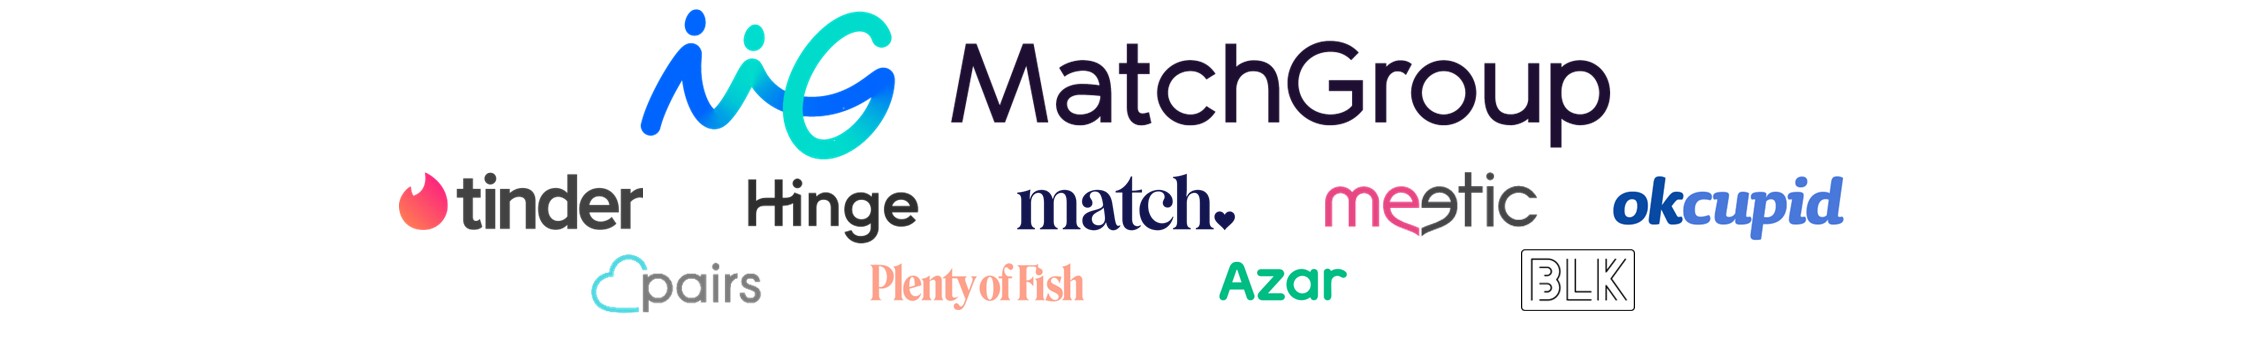 Match Group 和相關品牌 image.jpg